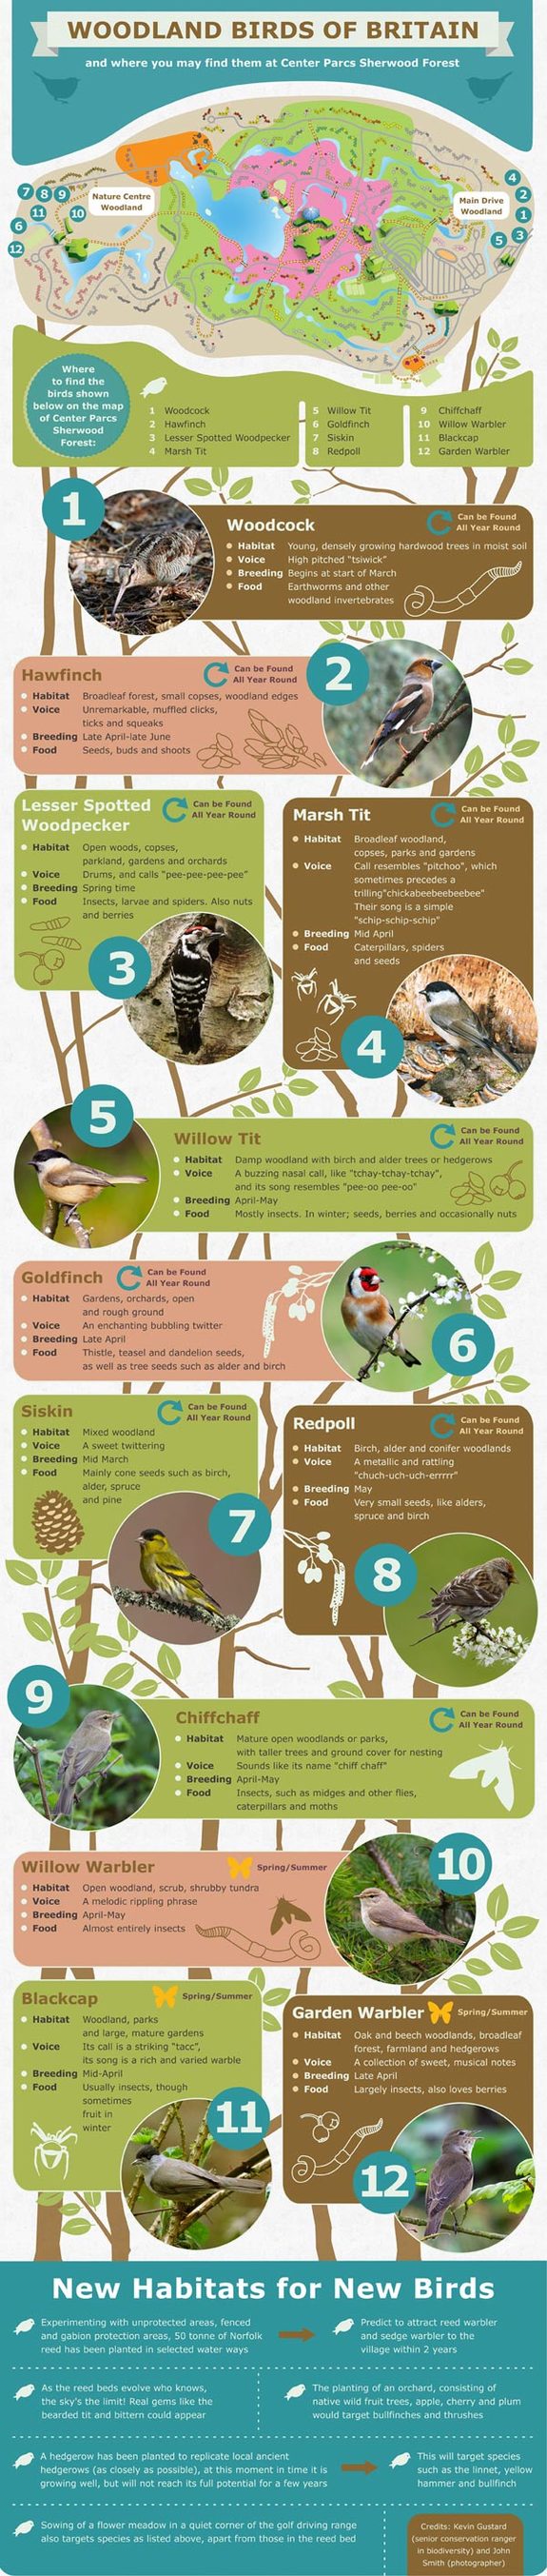 Woodland Birds of Britain Infographic